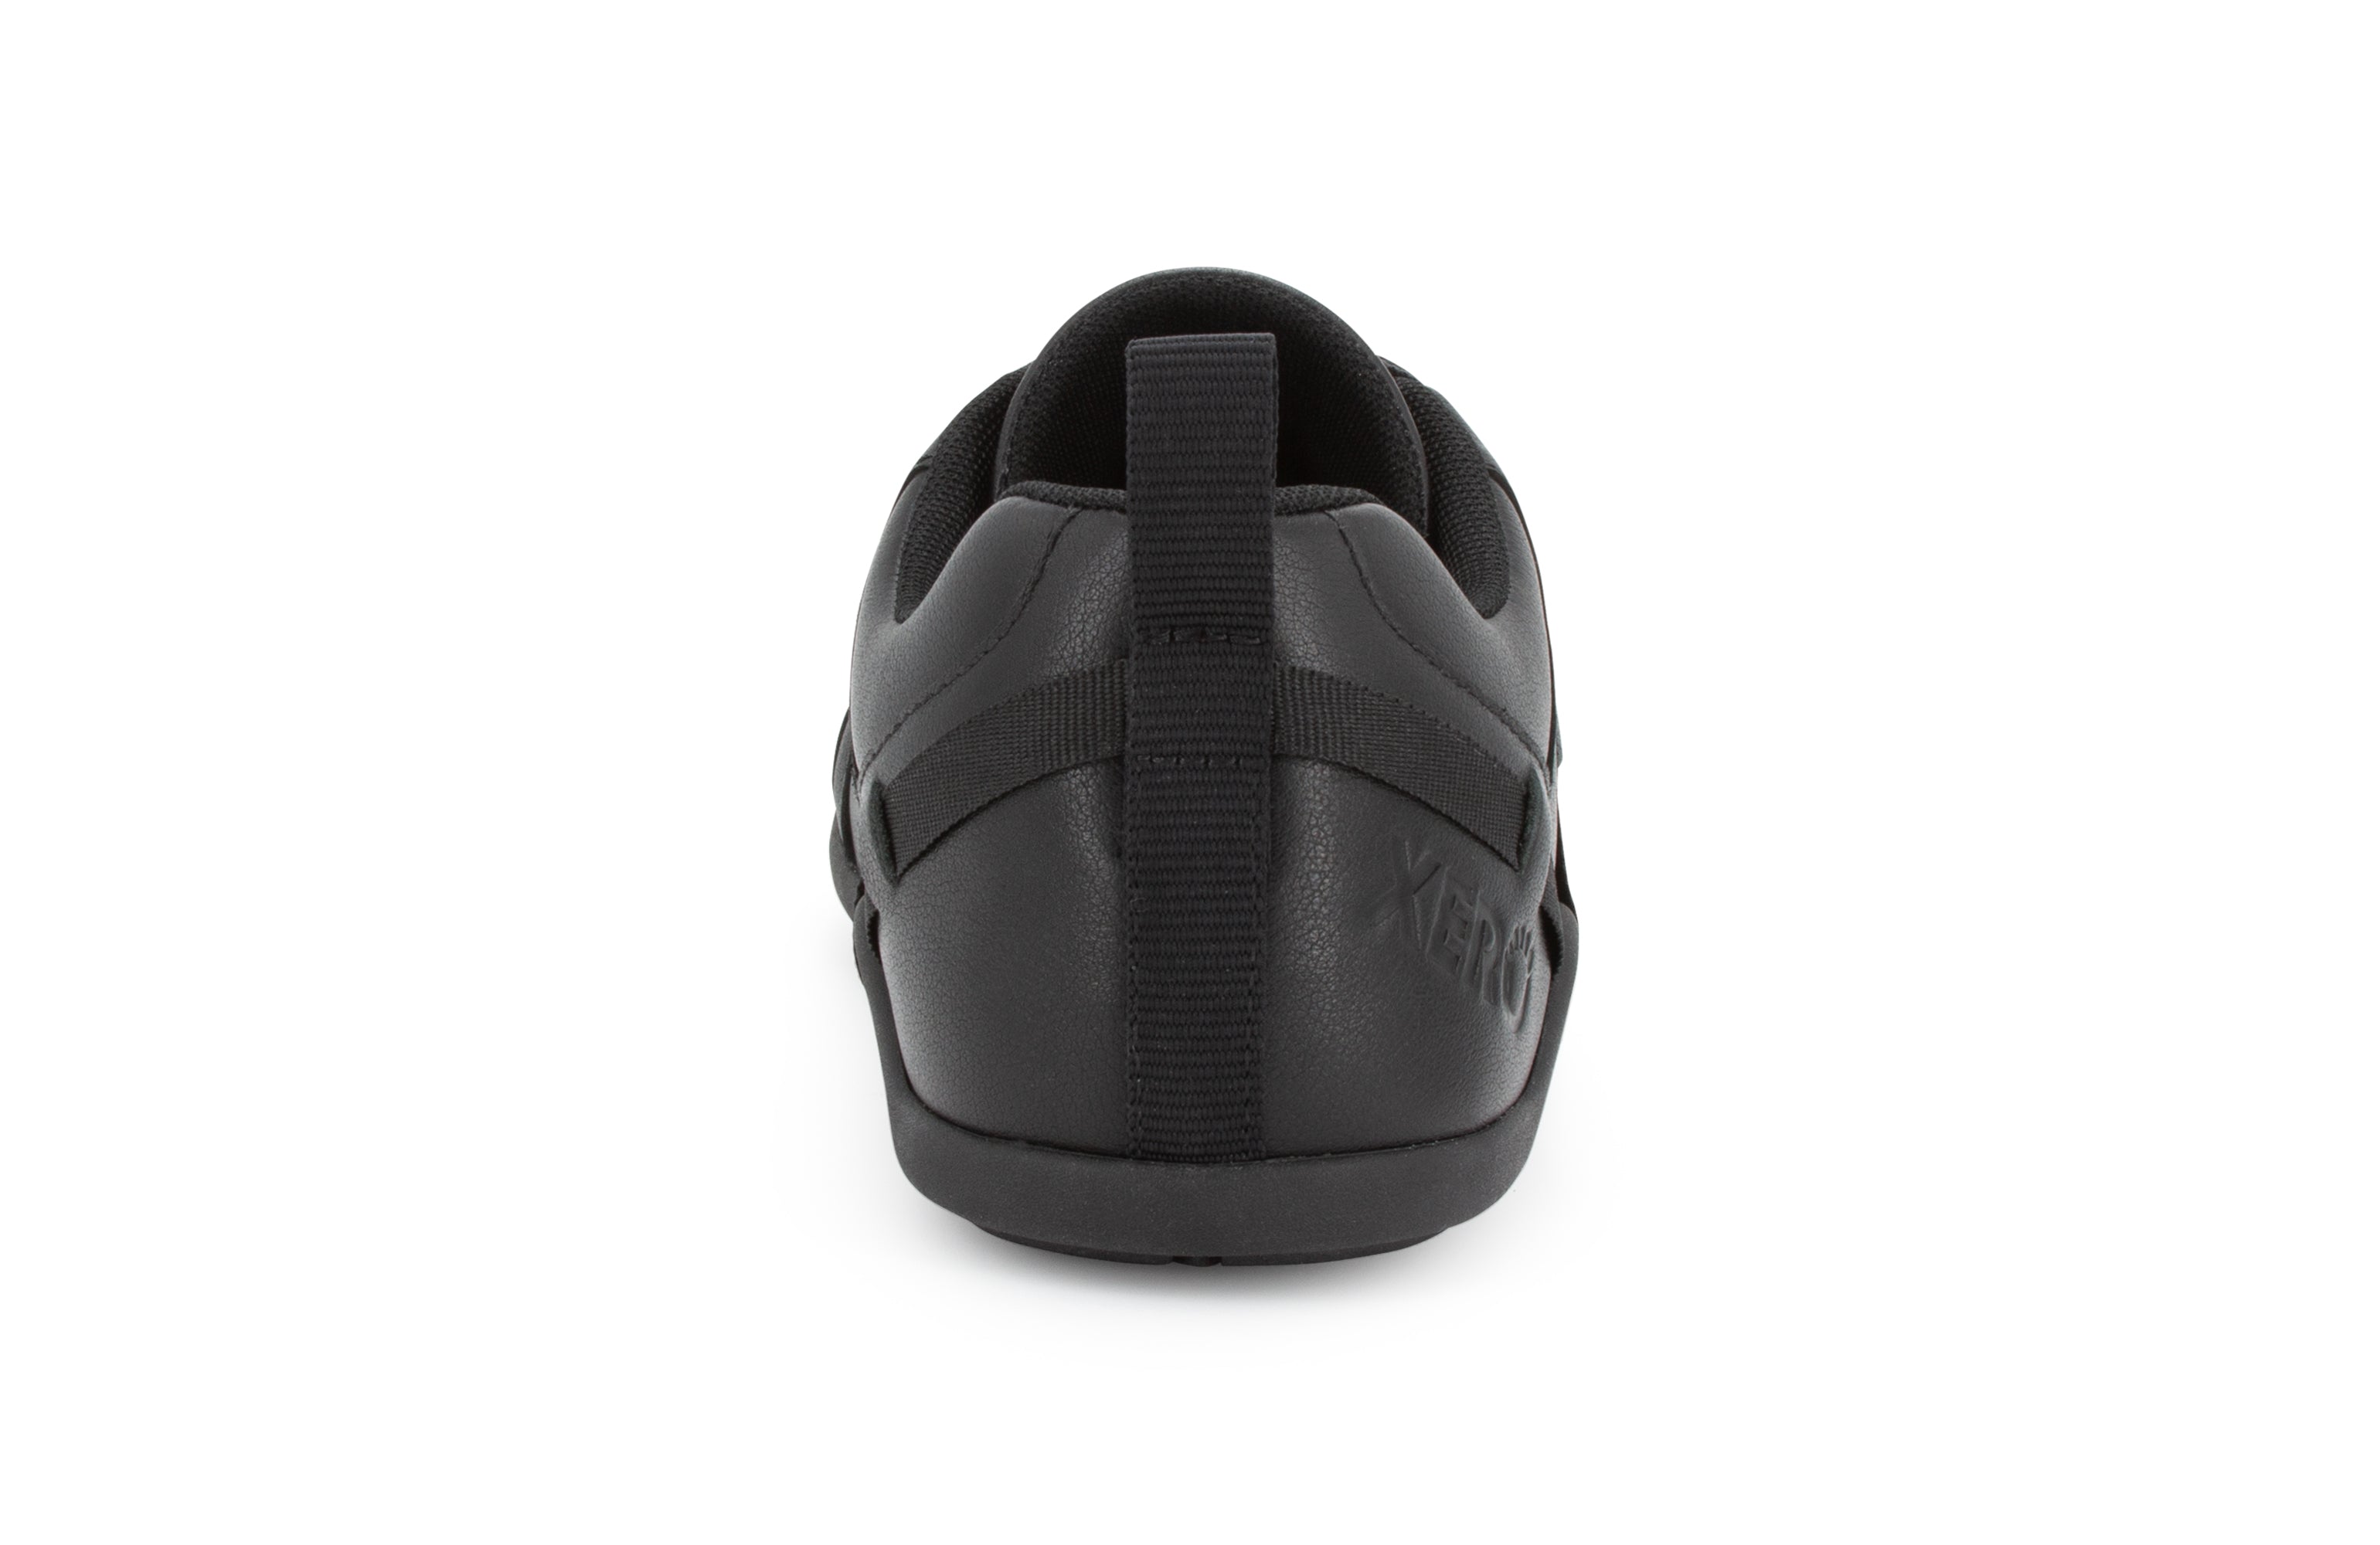 Xero Shoes Prio All-Day SR Womens barfods arbejdssko til kvinder i farven black, bagfra